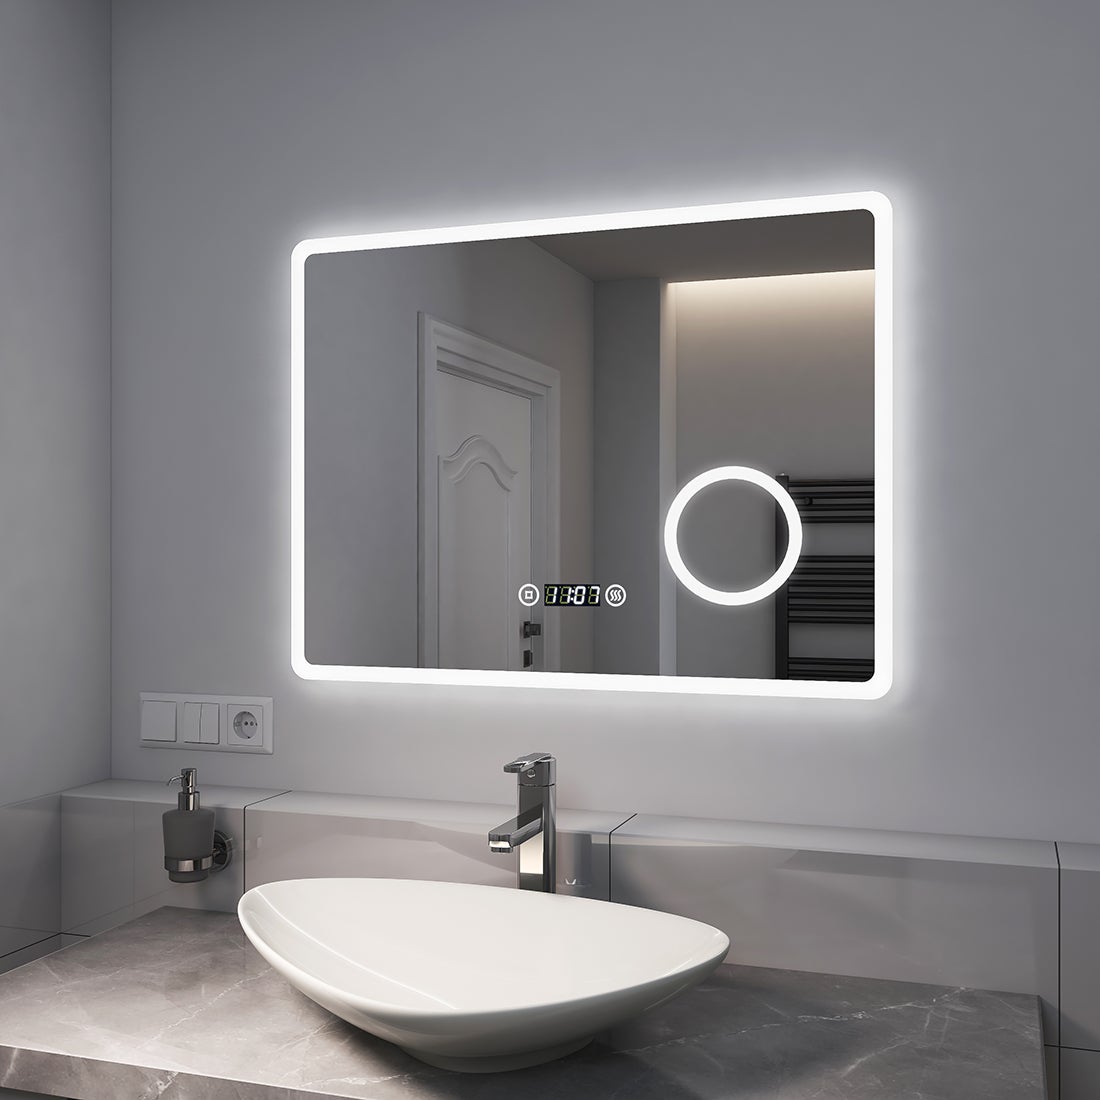 EMKE Badspiegel mit 3-fache Vergrößerung, LED Beleuchtung, 80x60cm, 3 Lichtfarben Dimmbar, Touch, Beschlagfrei, Uhr